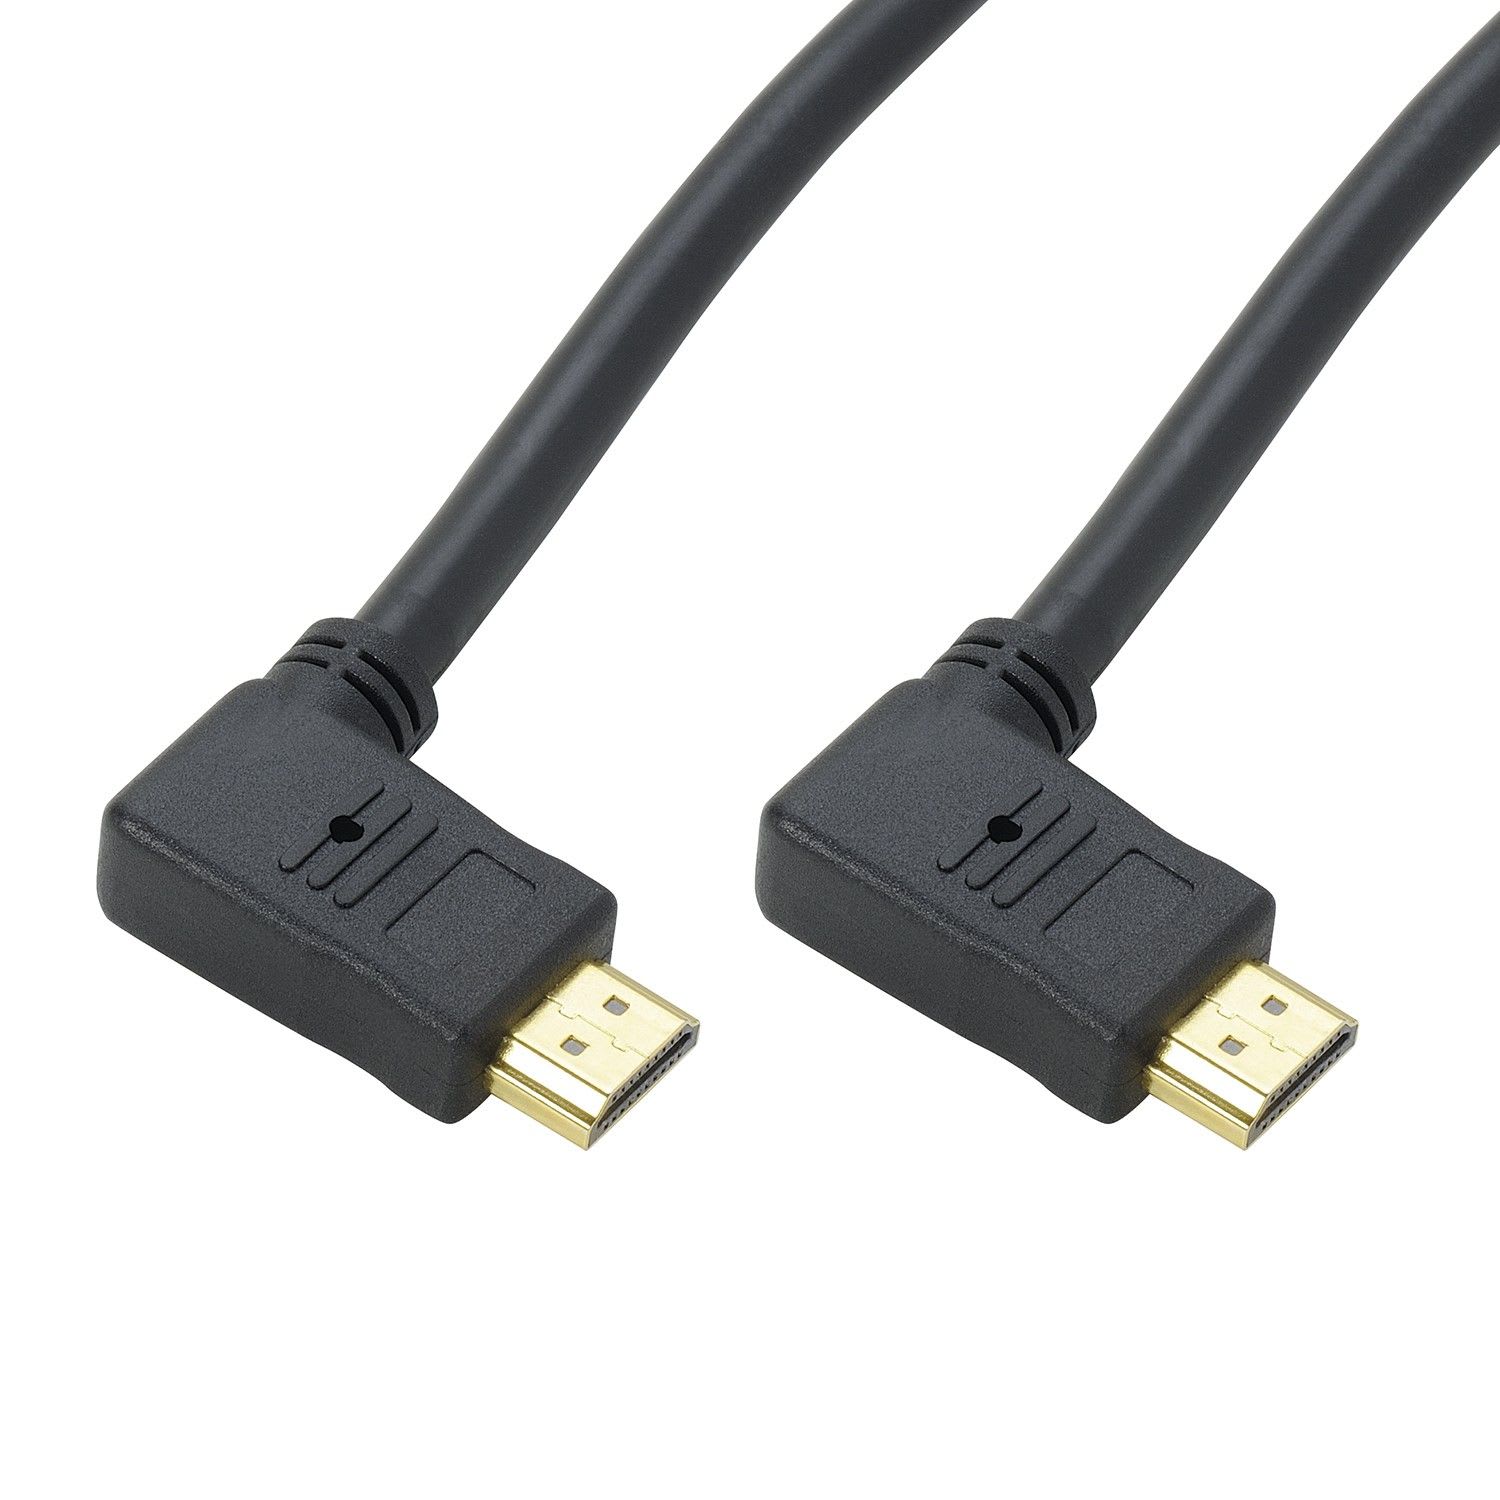 Erard - Cordon HDMI A M/M coudé latéral à 90° - 3m - 4K/60ips HDR 4:4:4 - 18 gbps - OR